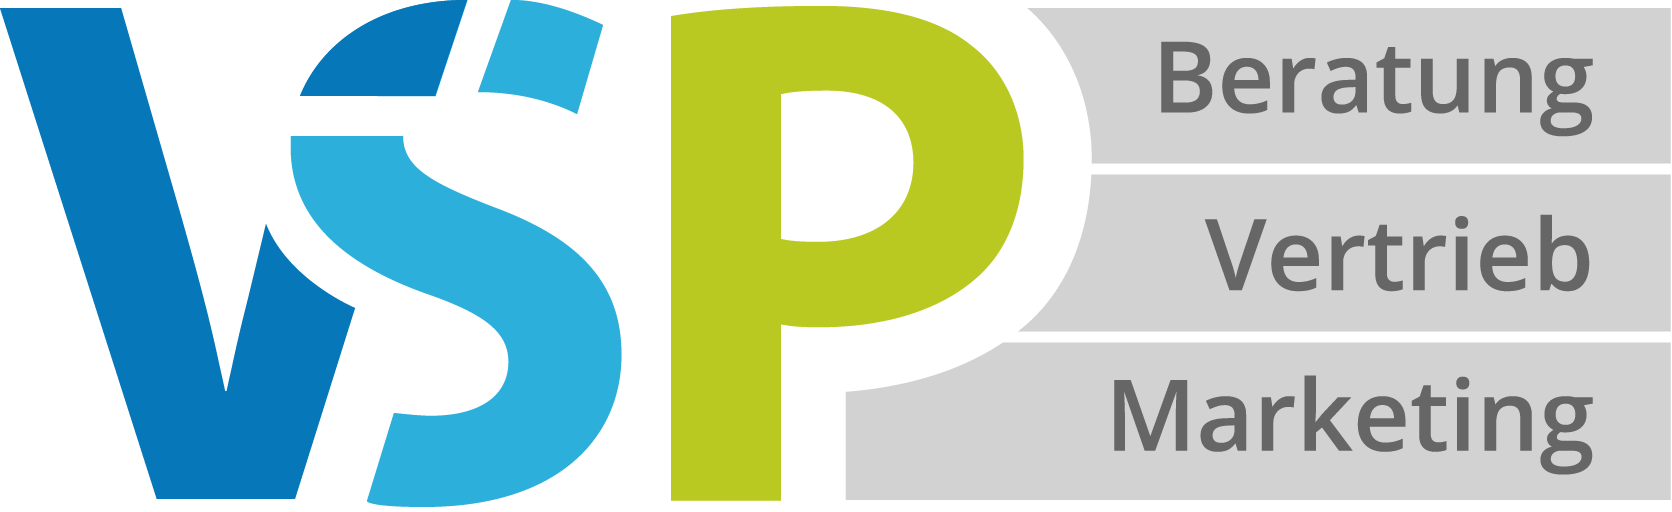 VSP Software Portal